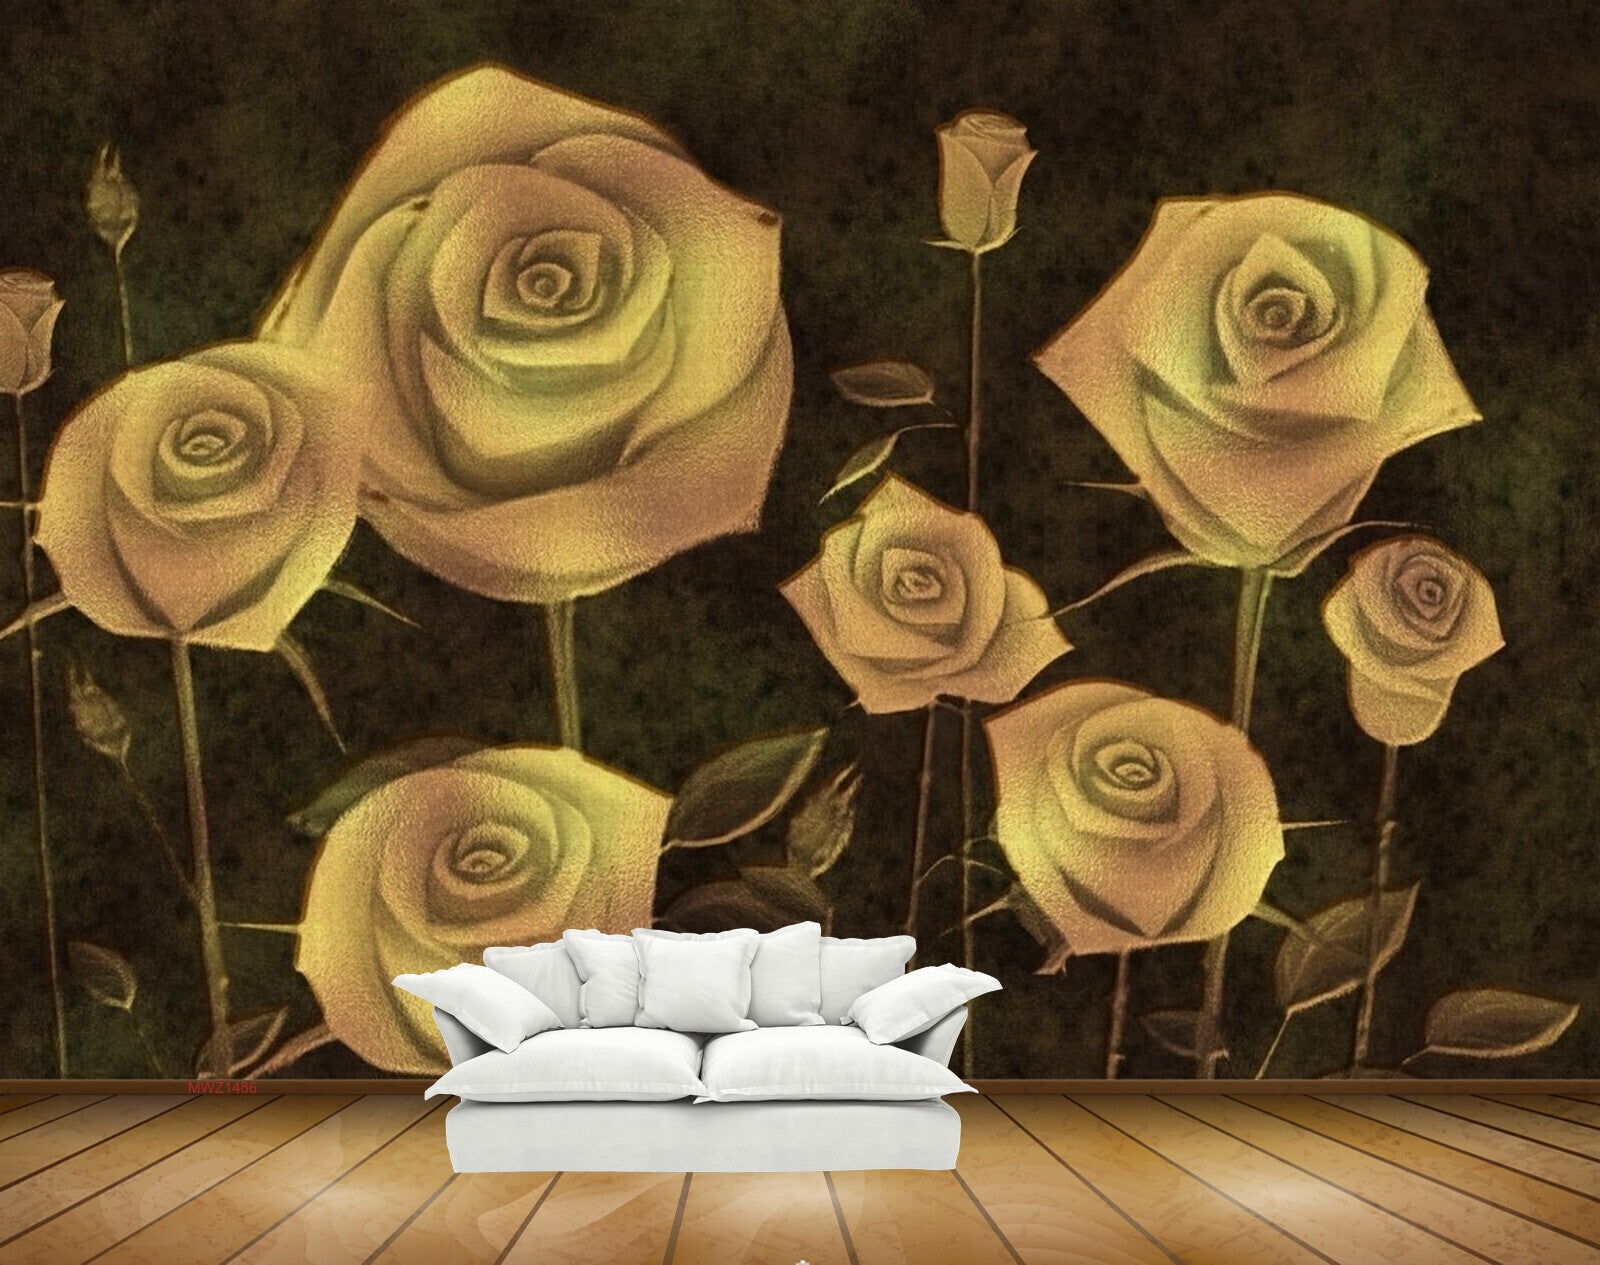 366853 Brown Flower Wallpaper Images Stock Photos  Vectors  Shutterstock